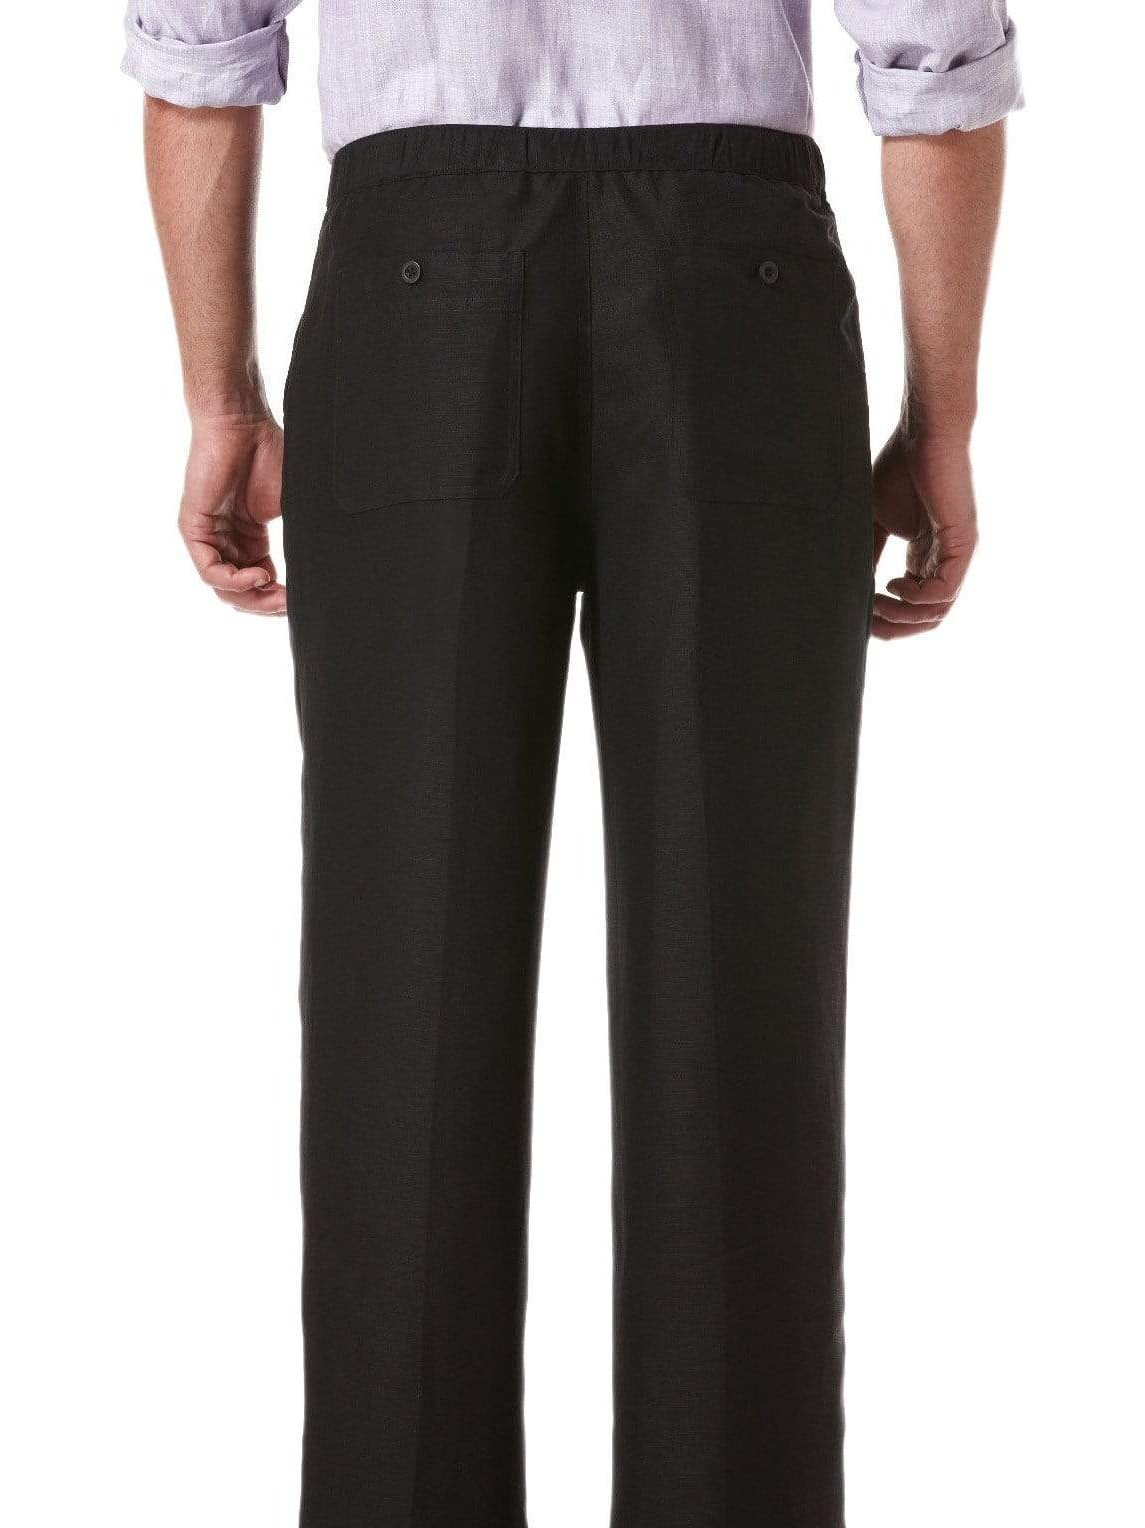 Cubavera PANTS Cubavera Classic Fit Solid Black Washable Casual Pants With Drawstring Waistband